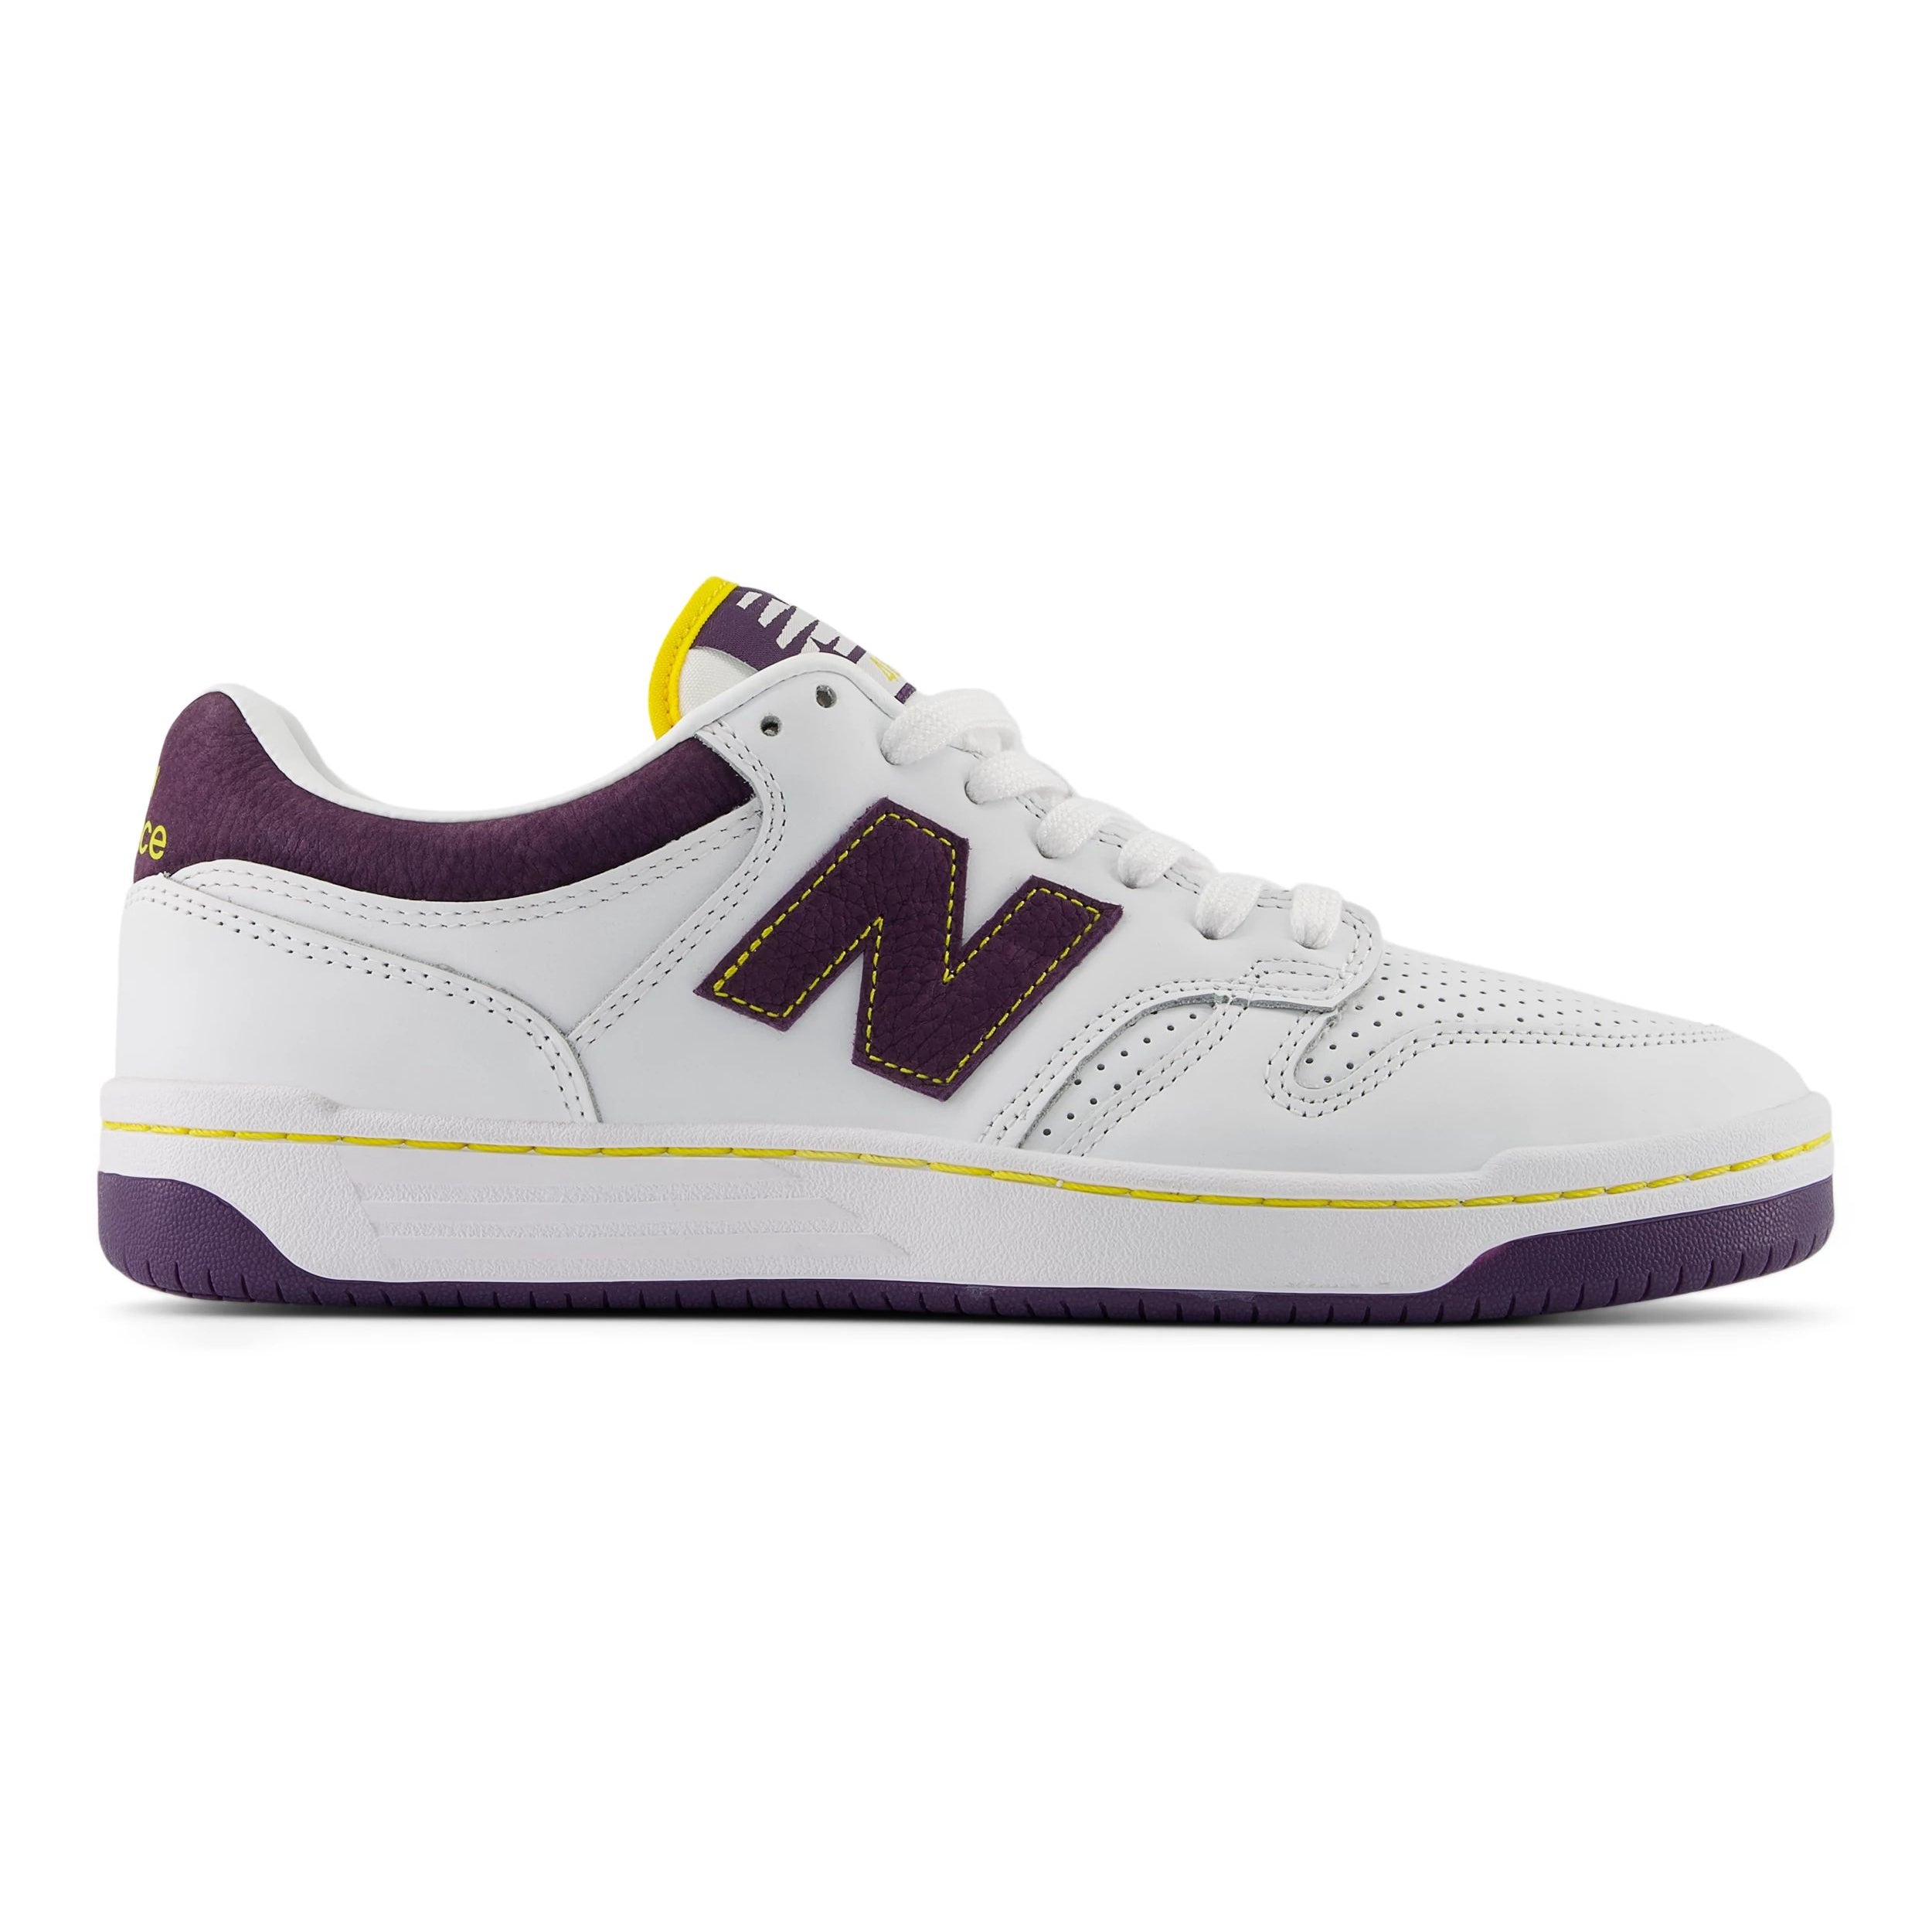 White 480 New Balance Skate Shoe